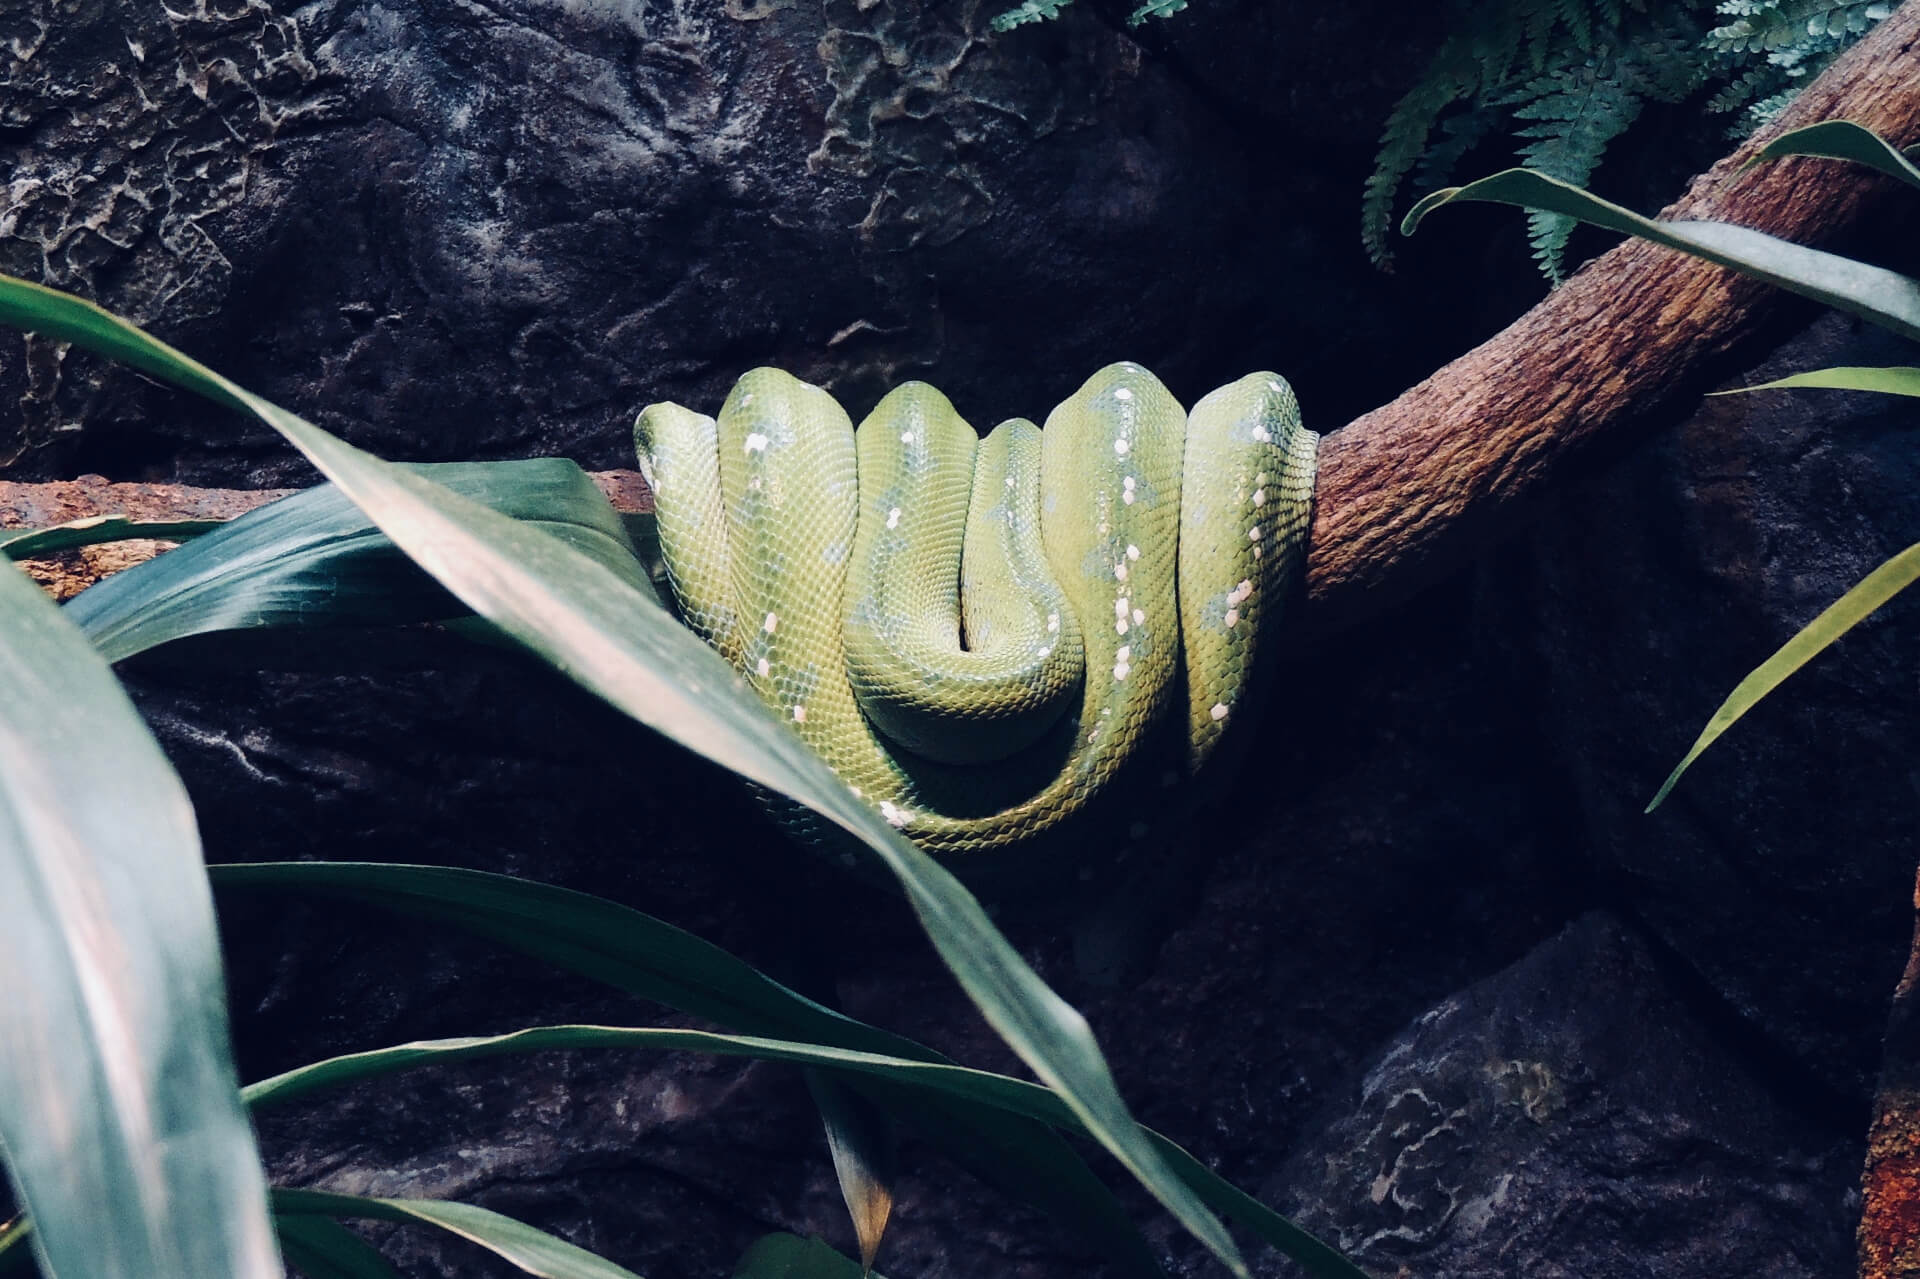 snake at australia zoo